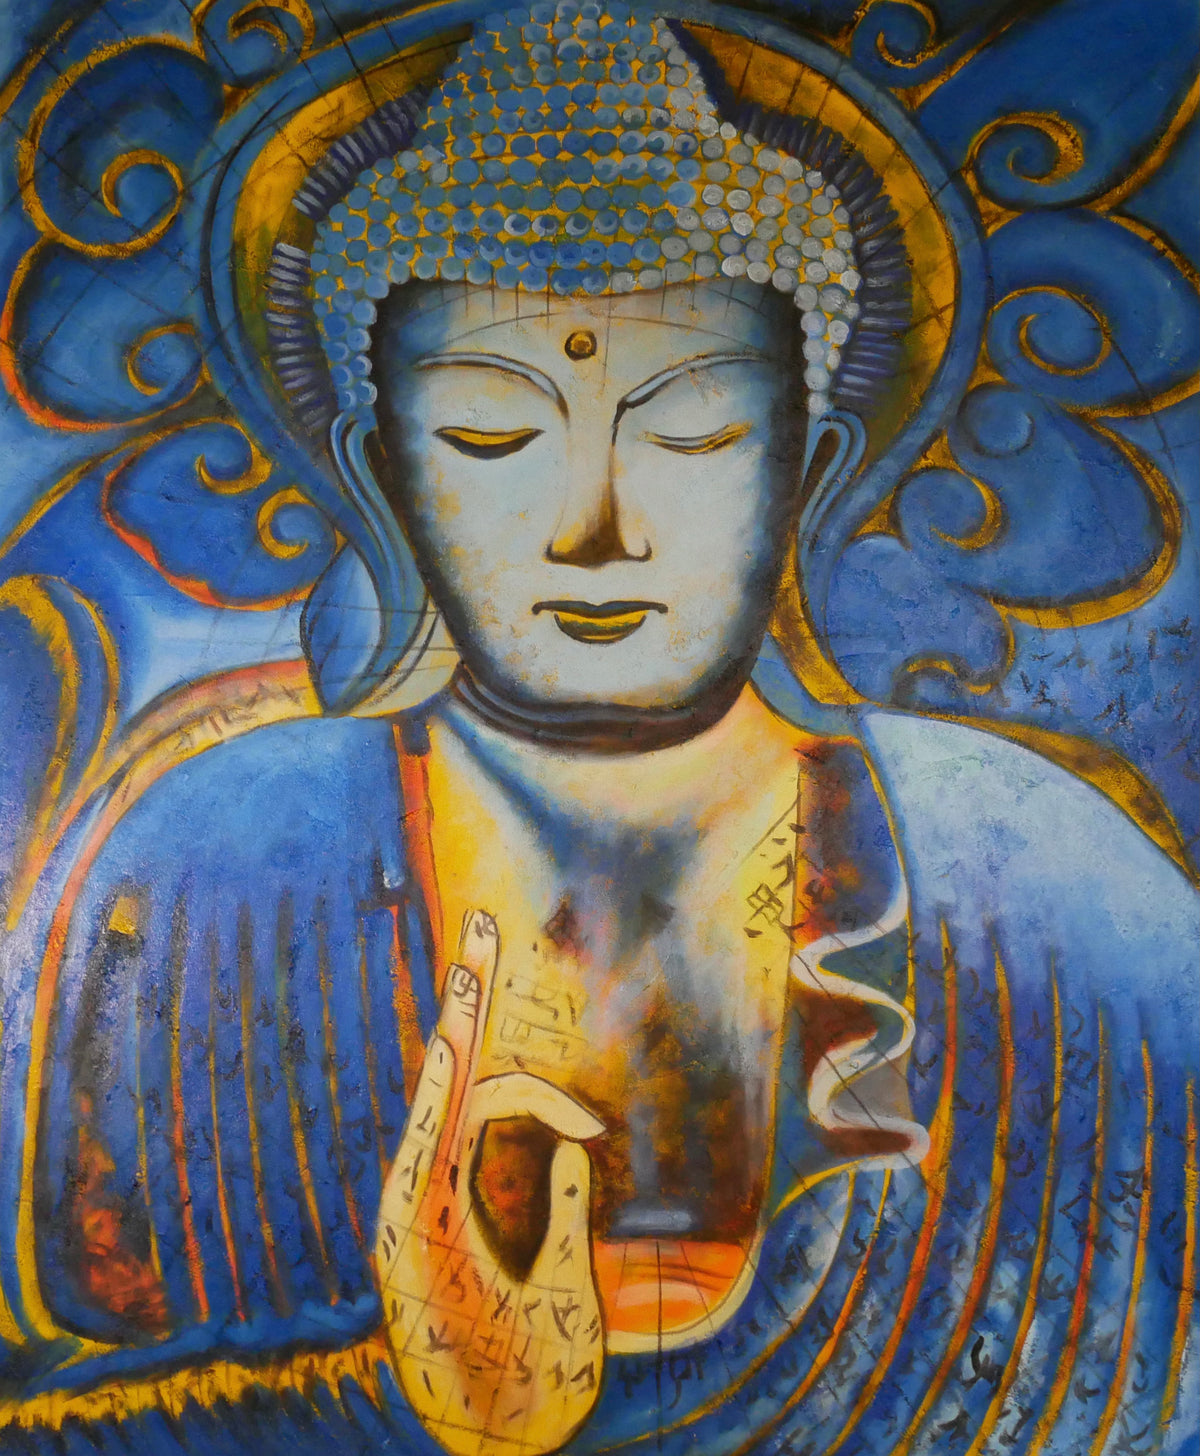 Dharmachakra Teaching Buddha, Blue and Golden Yellow – Acrylic on Canvas (100x120 cm)